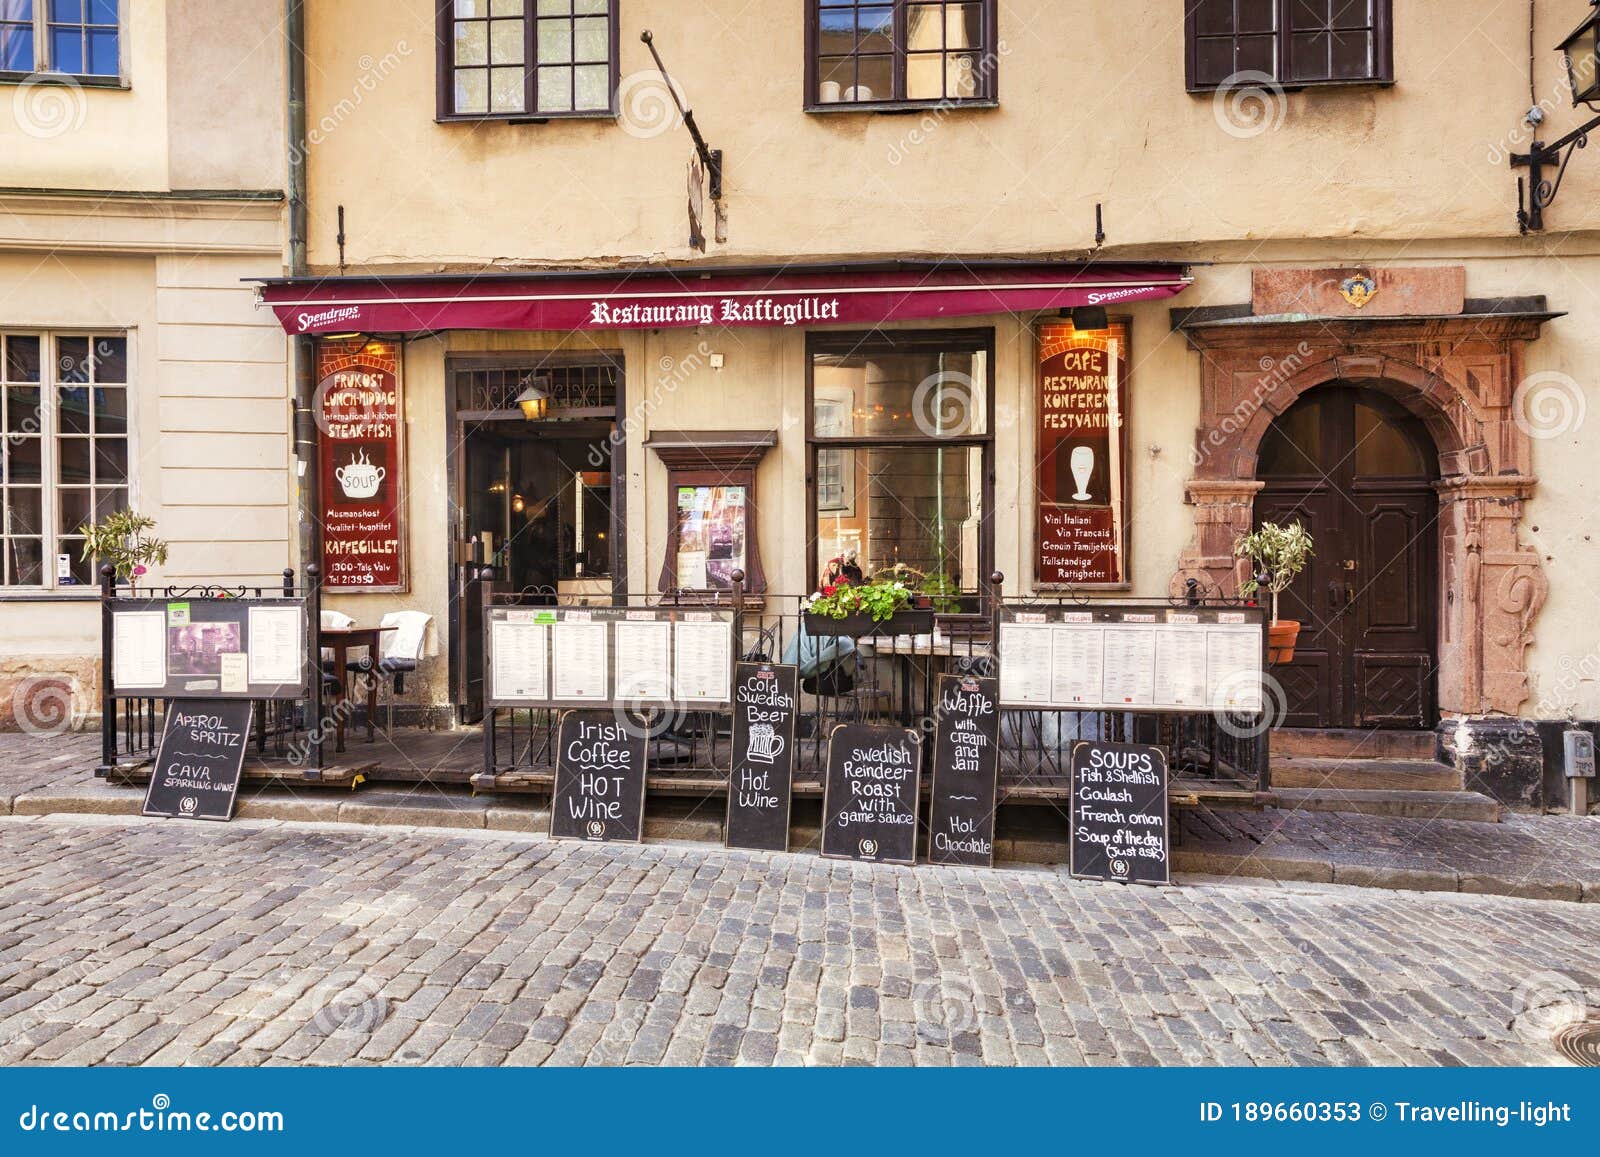 gamla stan stockholm restaurants